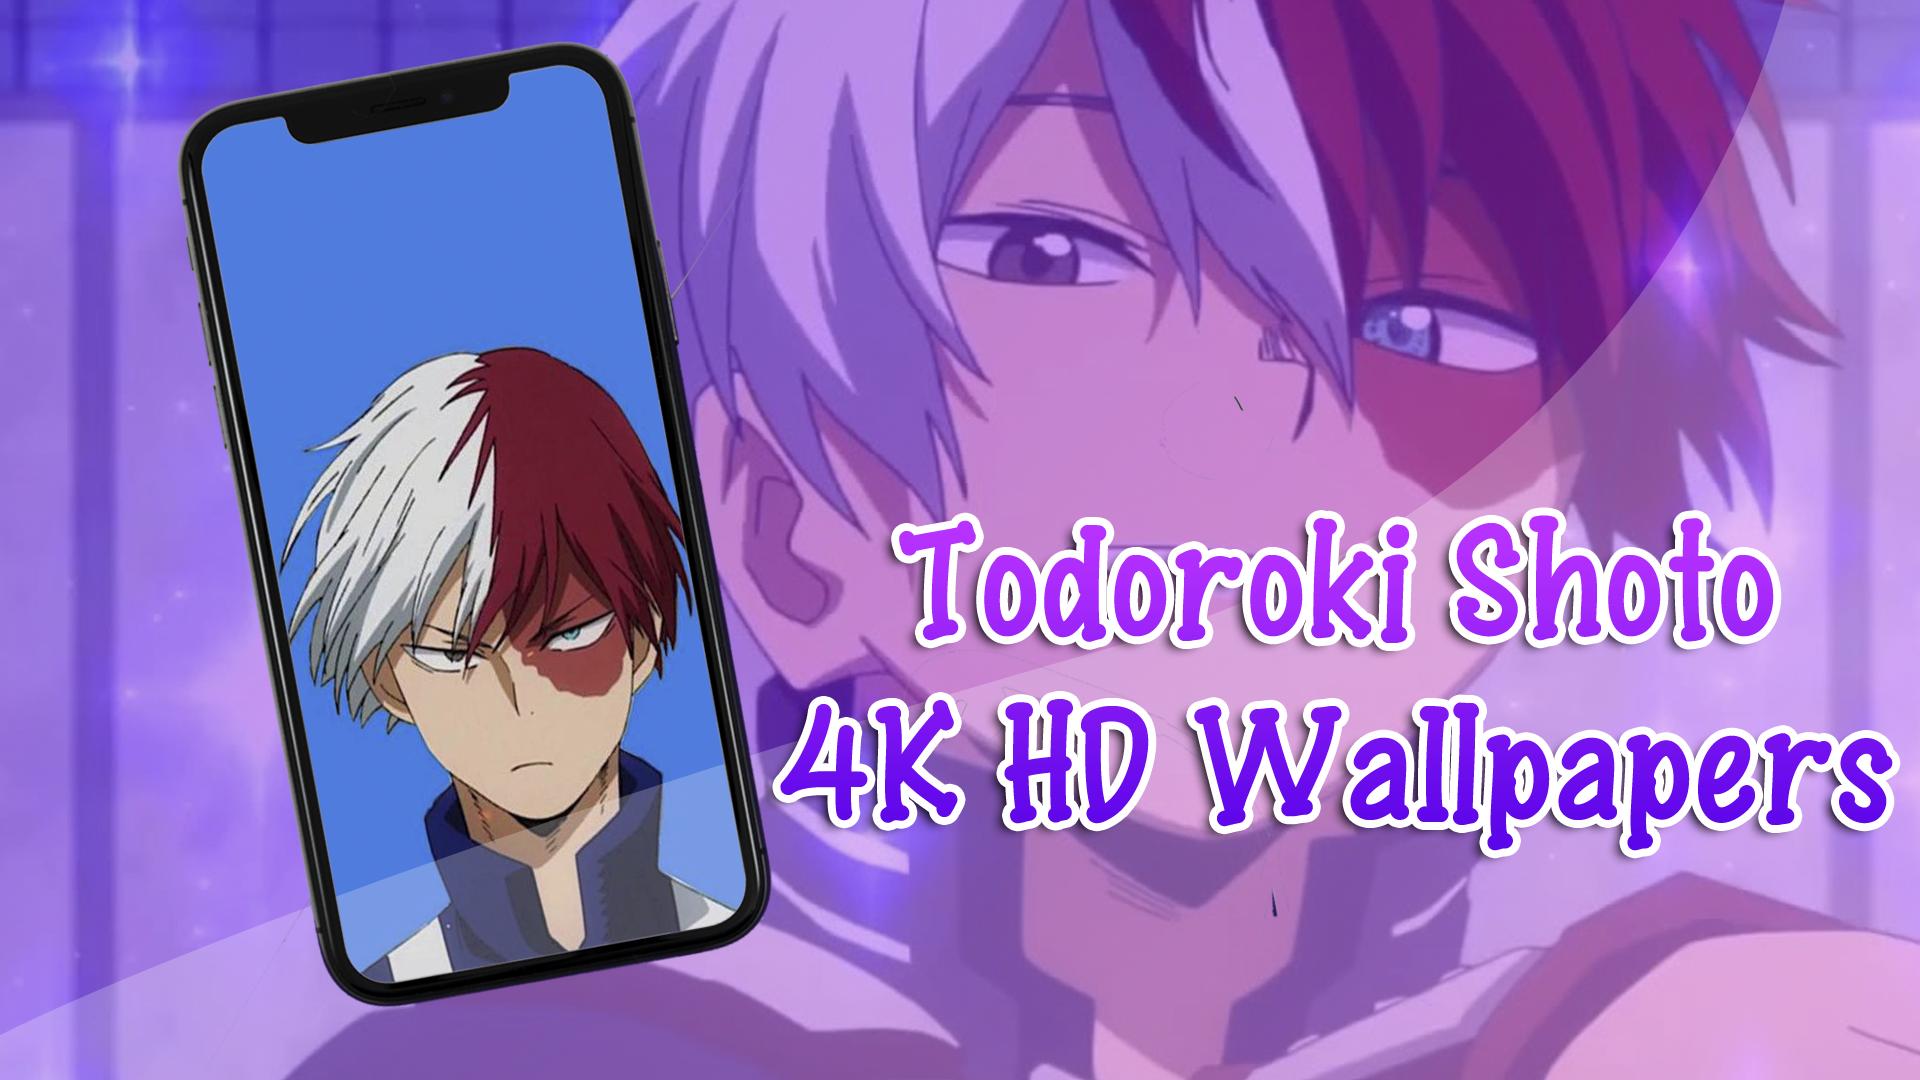 Todoroki Shoto 4k Hd Wallpapers For Android Apk Download